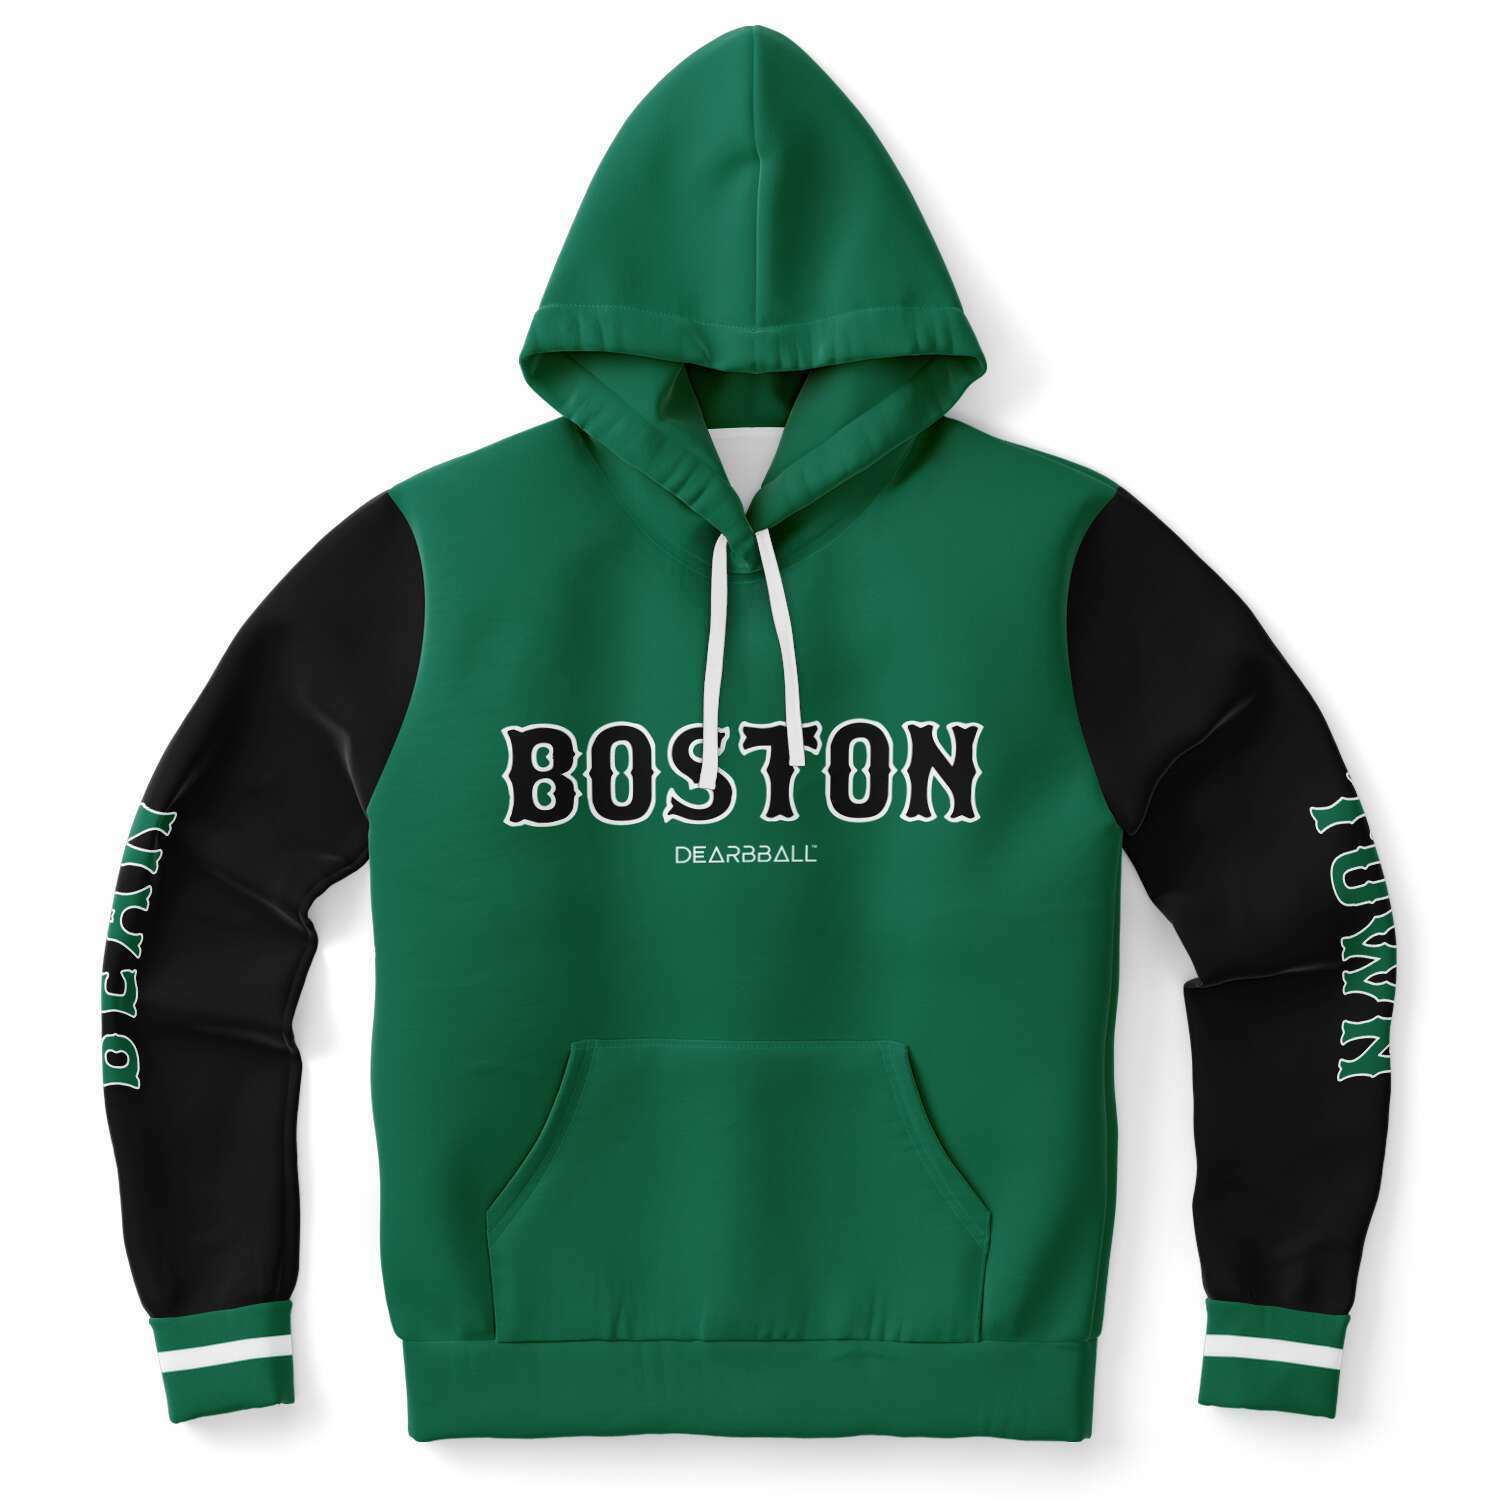 Sweat-a-capuche-Jayson-Tatum-Celtics-Boston-Dearbball-vetements-marque-france